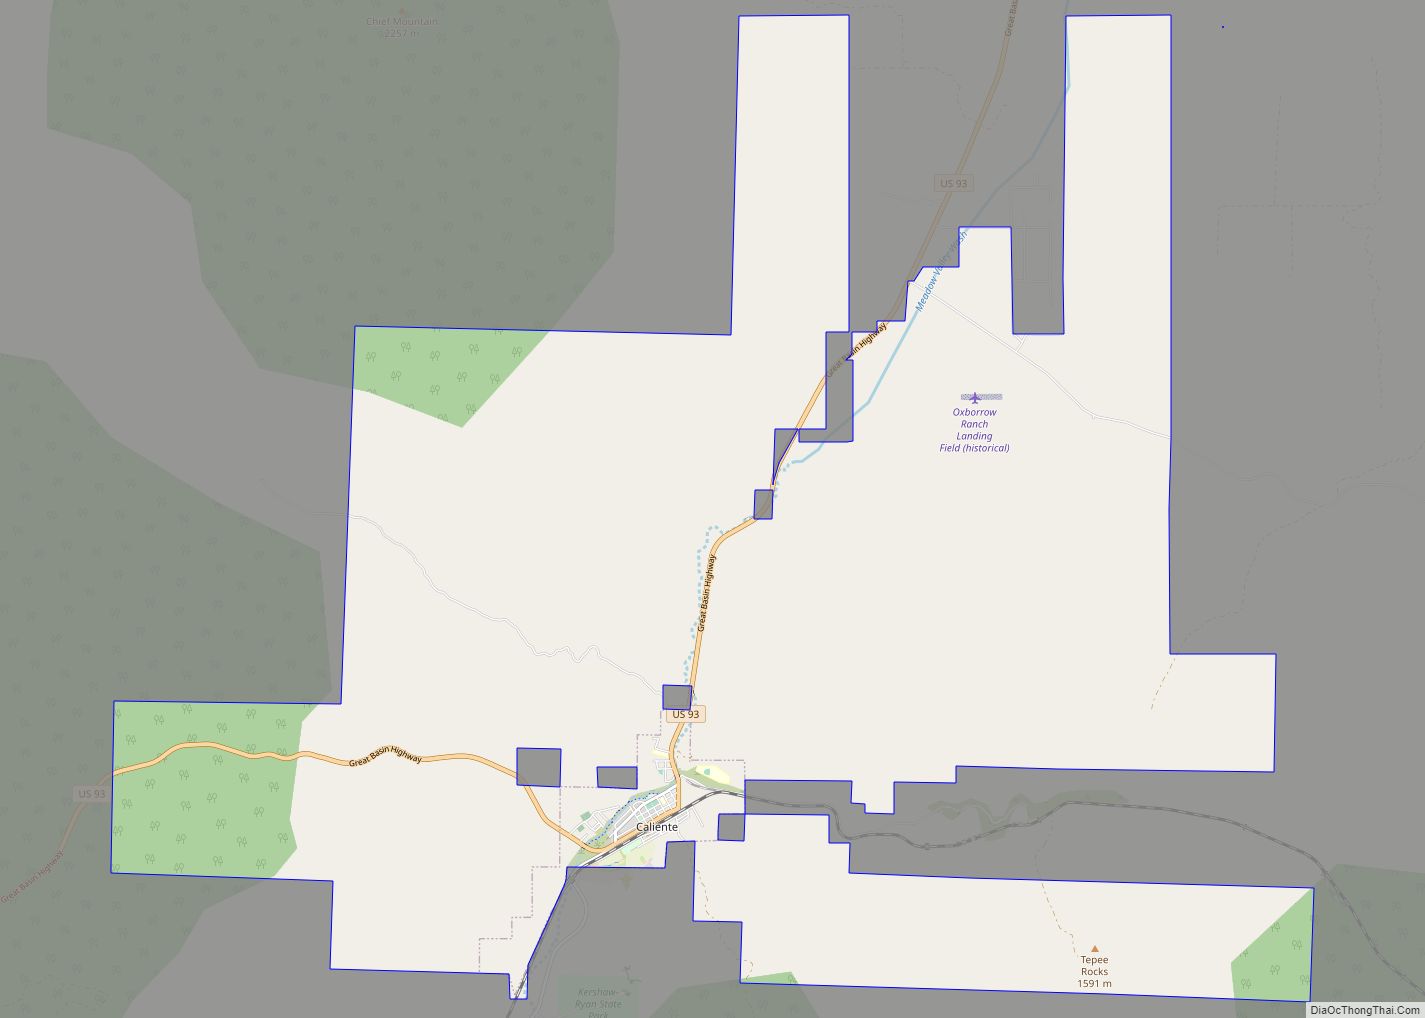 Map of Caliente city